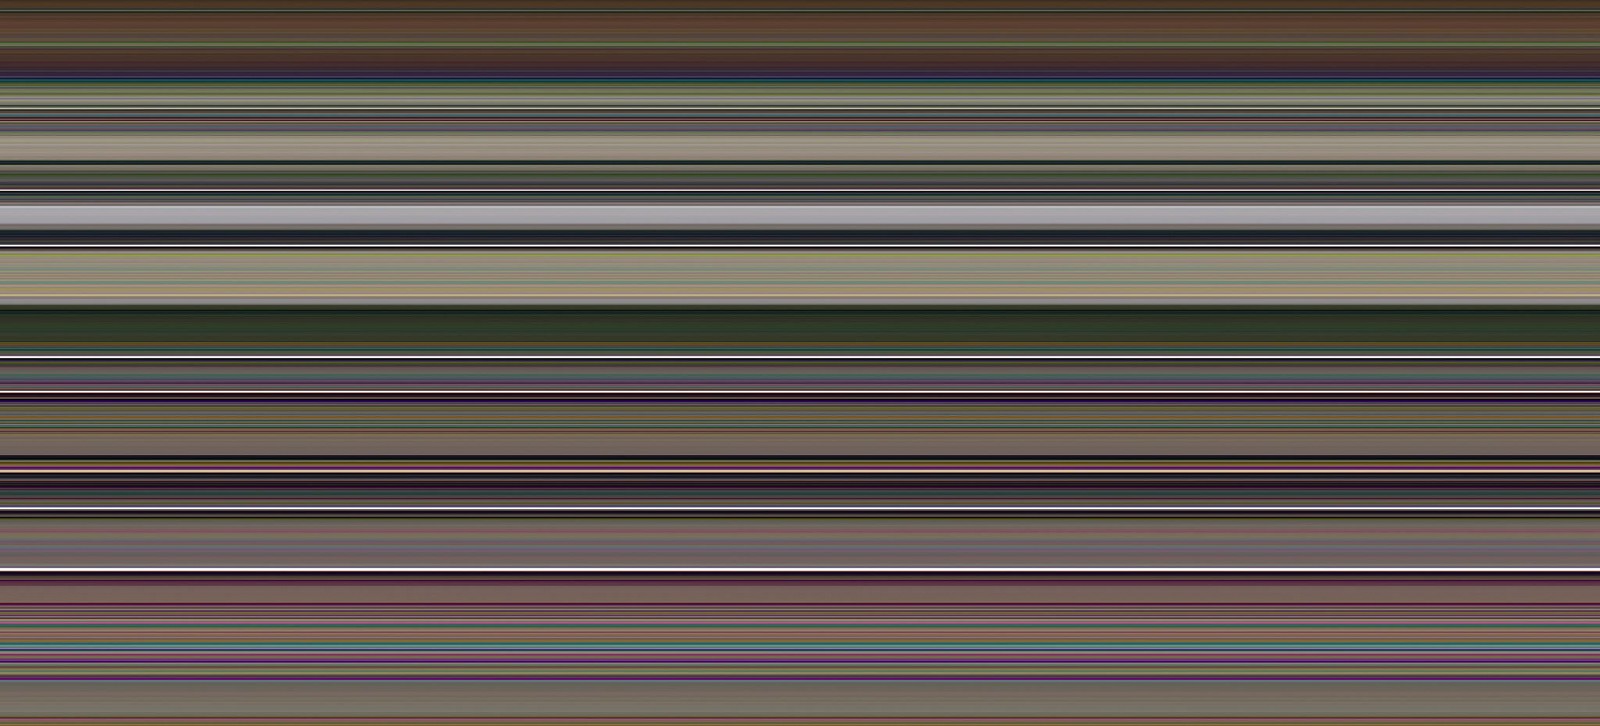 Jay Mark Johnson, L ENIGMA DELLA PUNKTLIICHKEIT #7, 2008 Hamburg DE
archival pigment on paper, mounted on aluminum, 40 x 88 in. (101.6 x 223.5 cm)